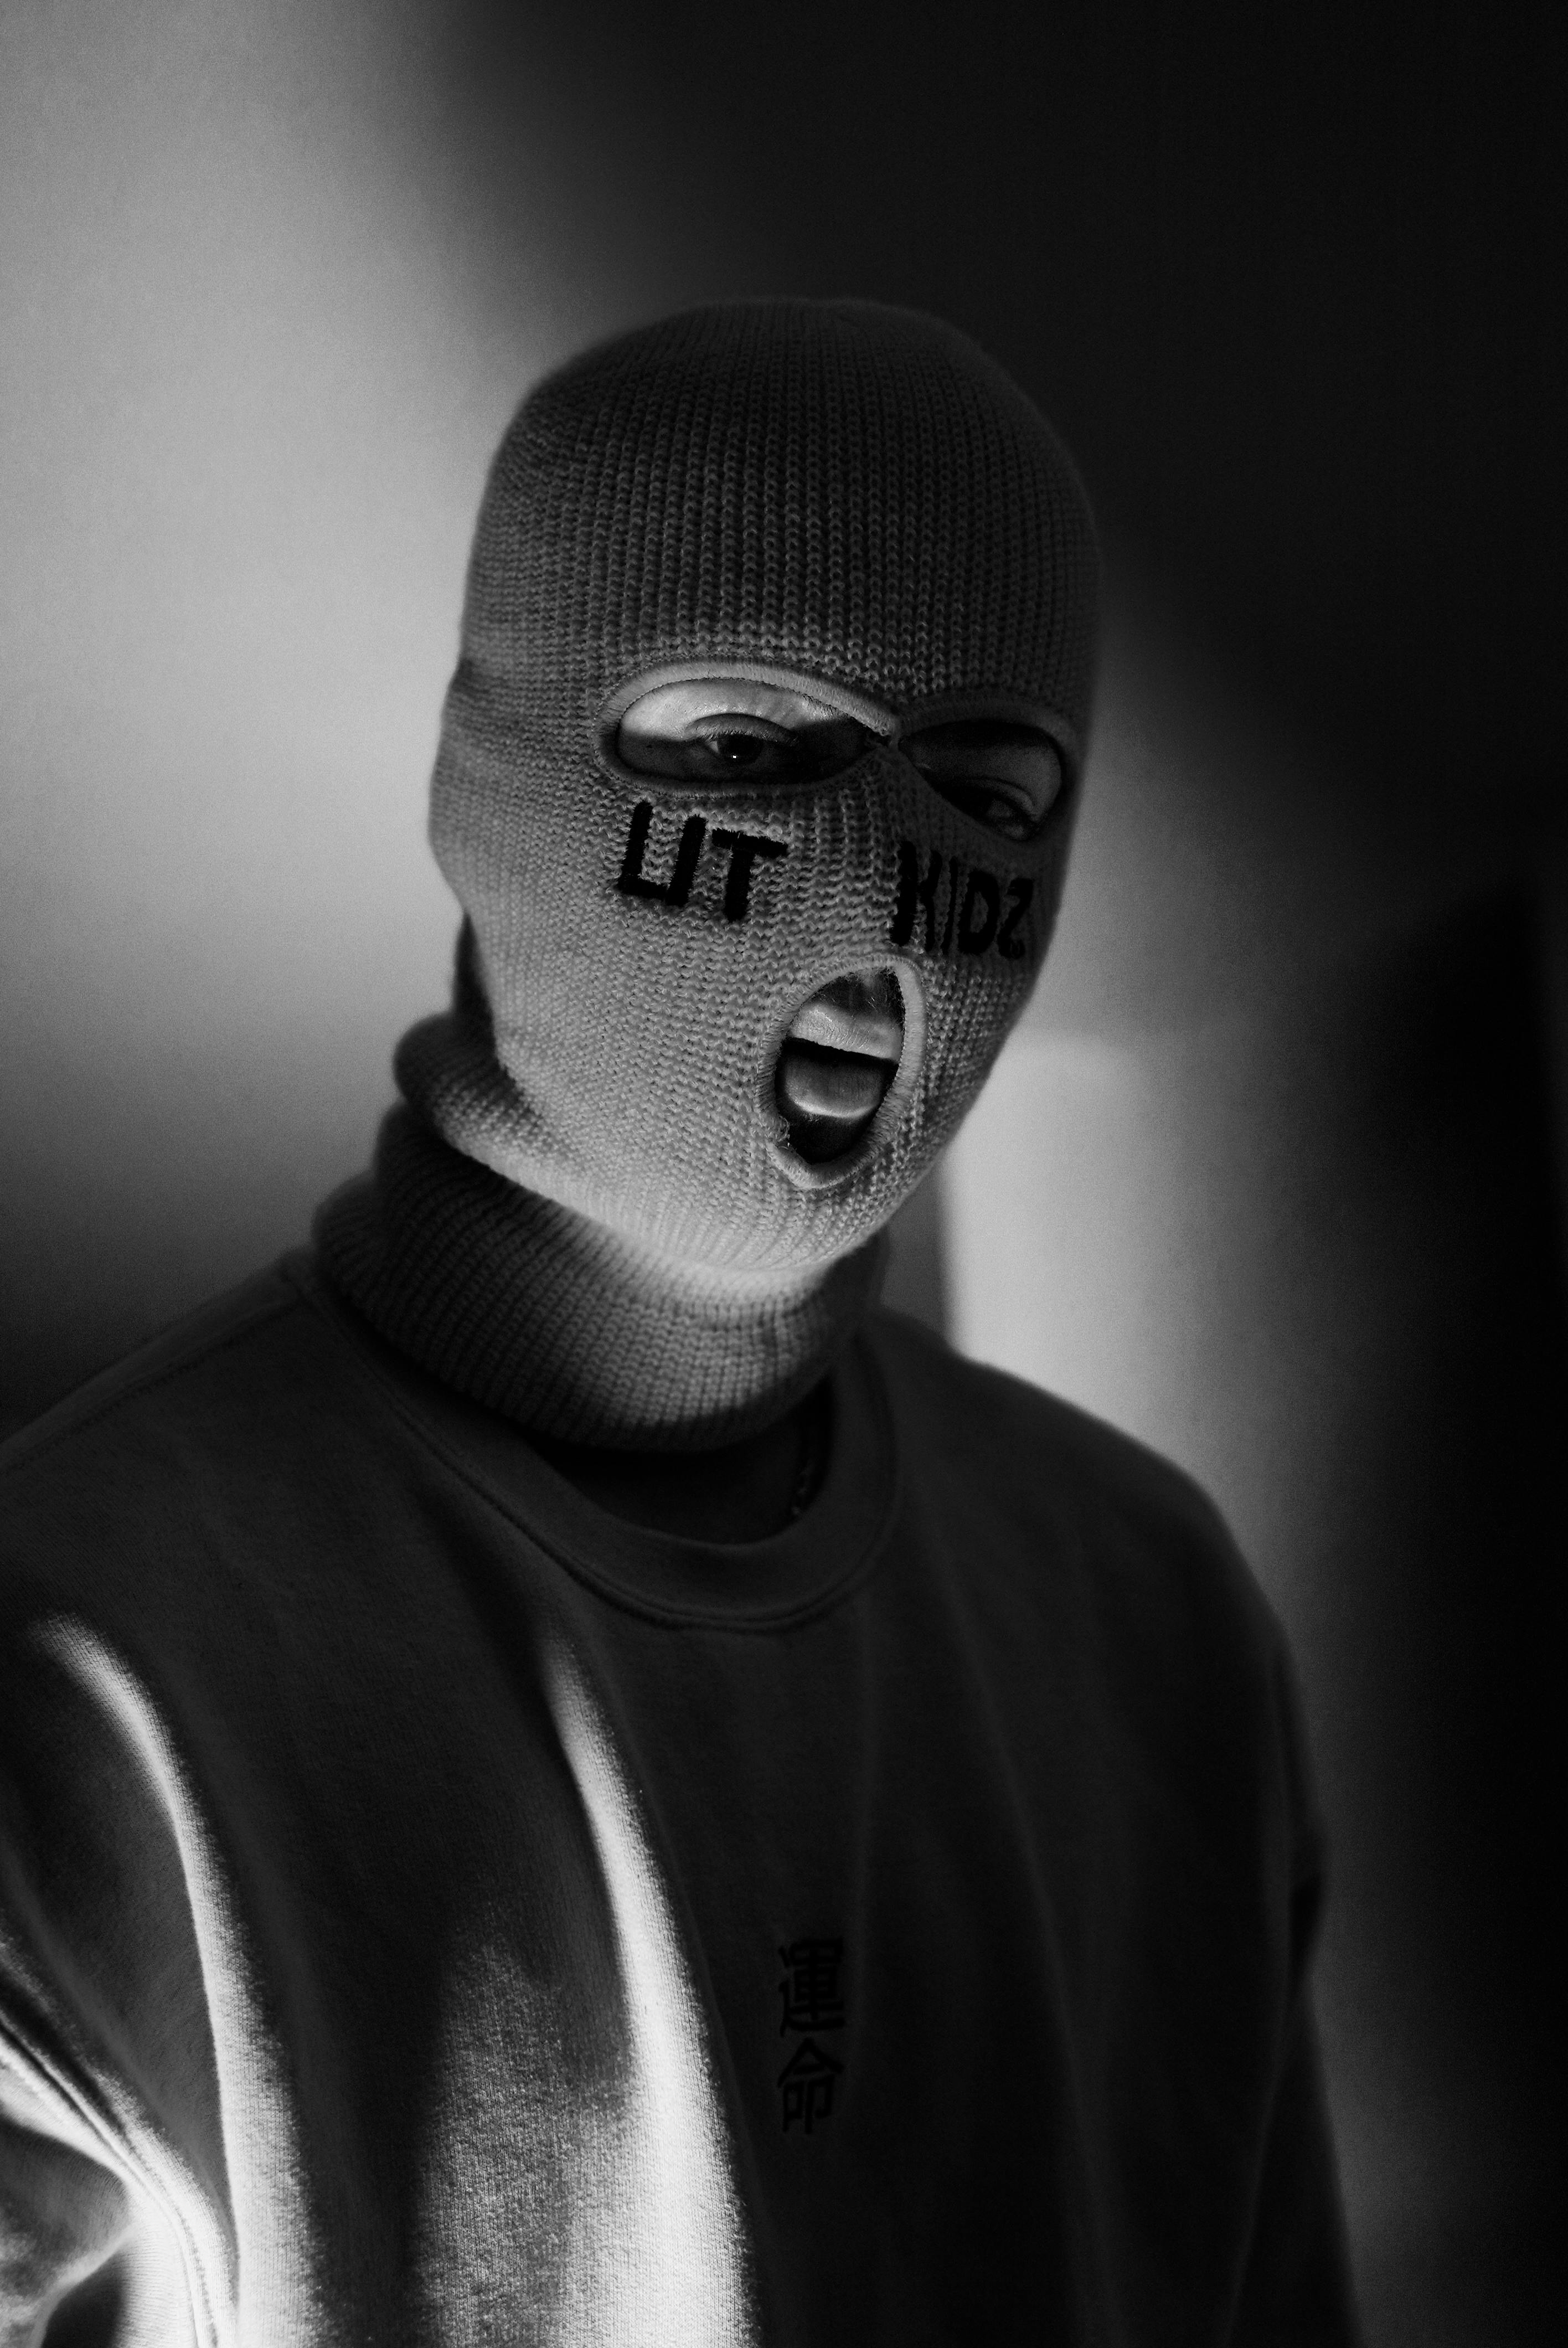 Grayscale Photograph of a Man Wearing a Ski Mask · Free Stock Photo